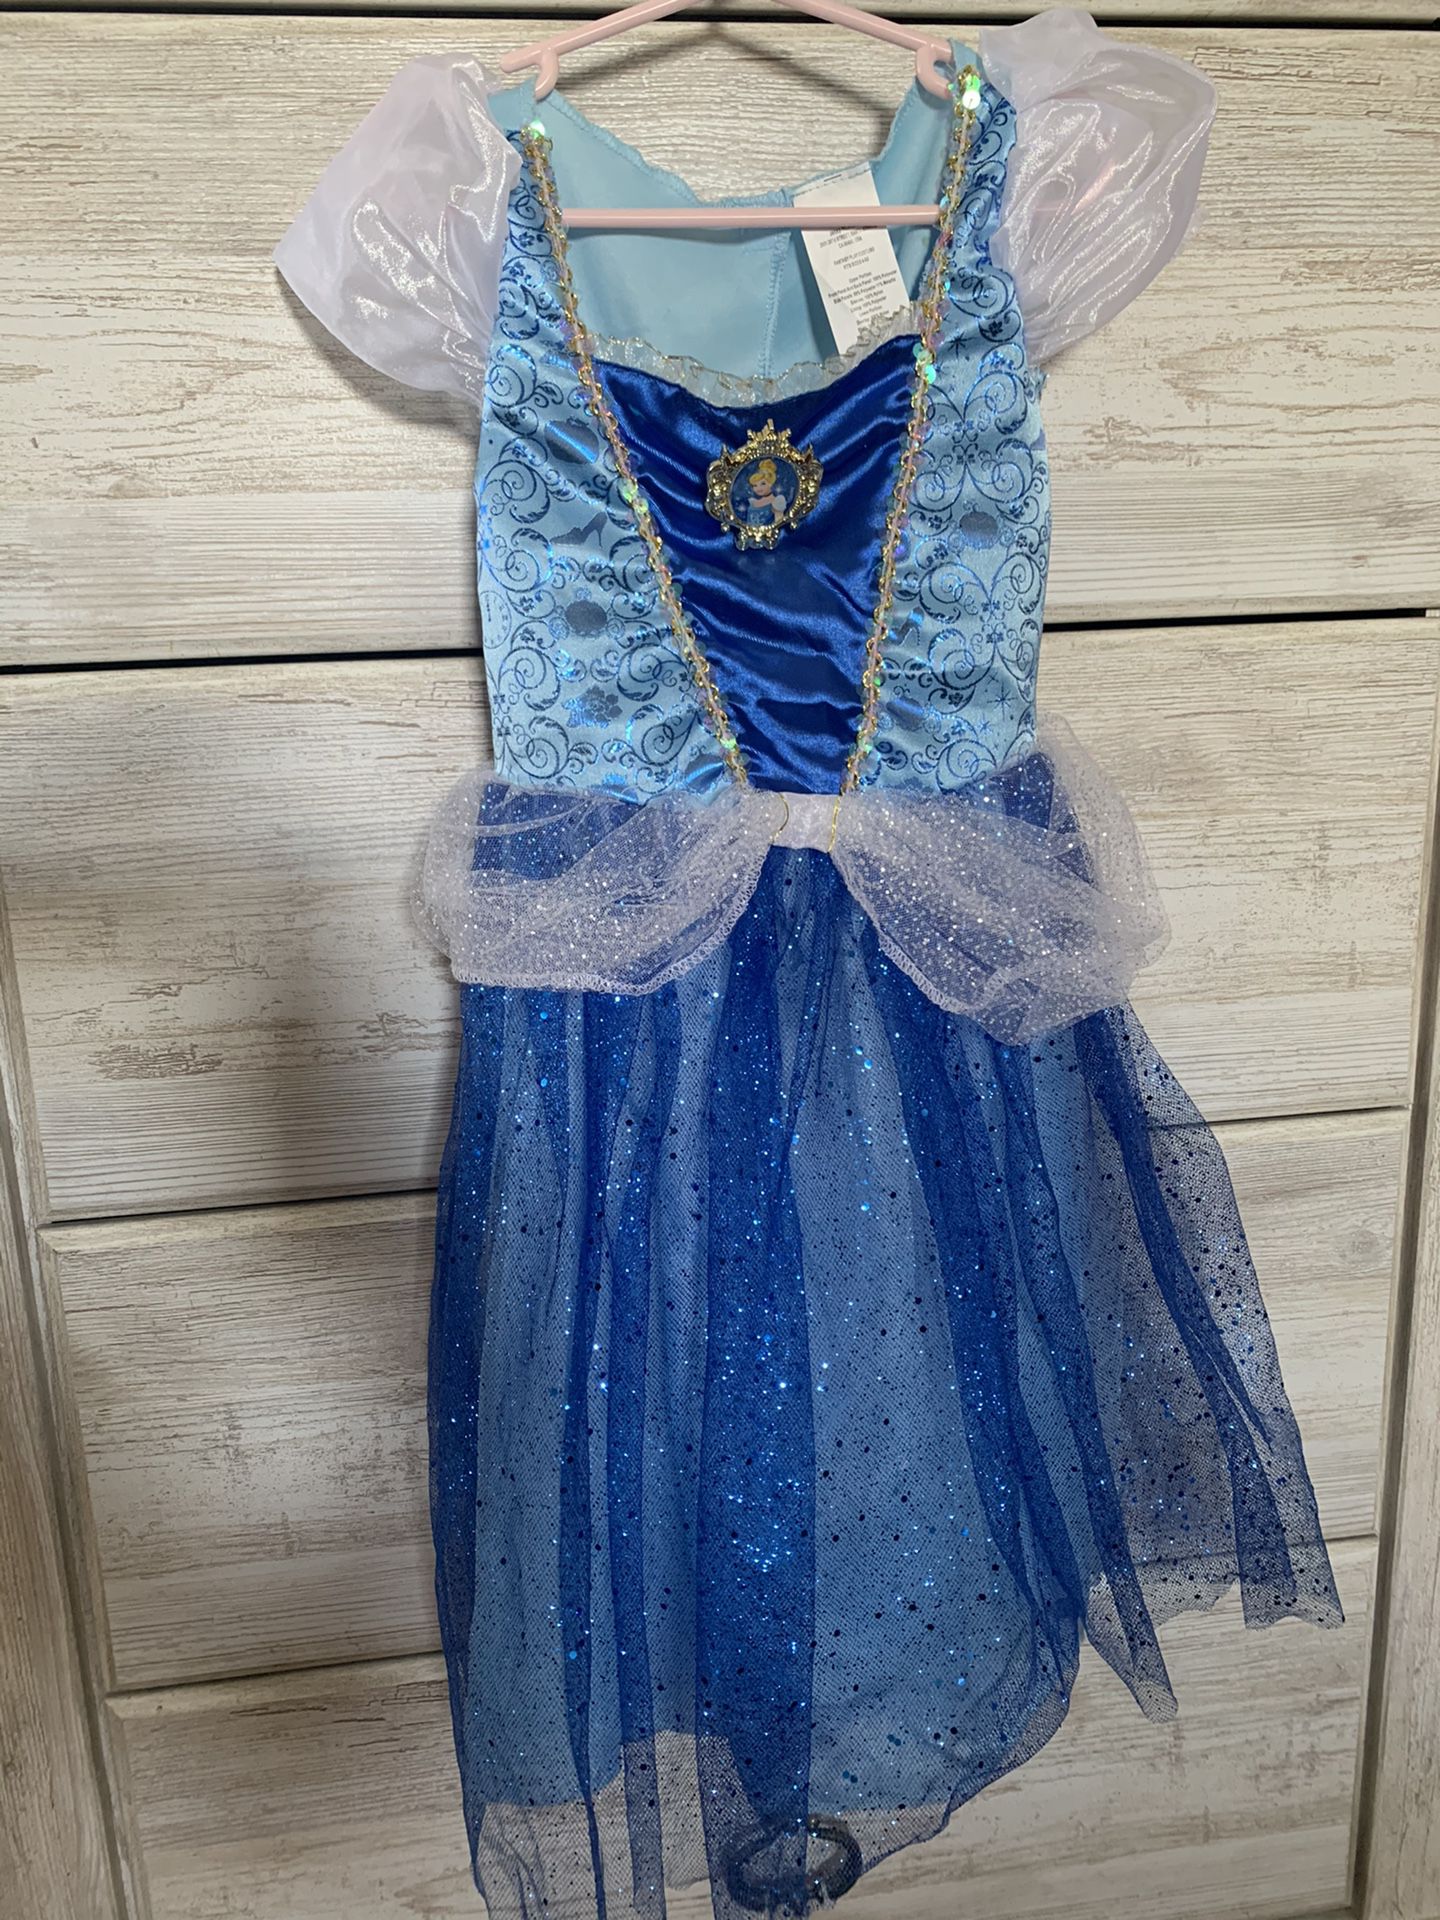 Disney princess Cinderella dress 4-6x